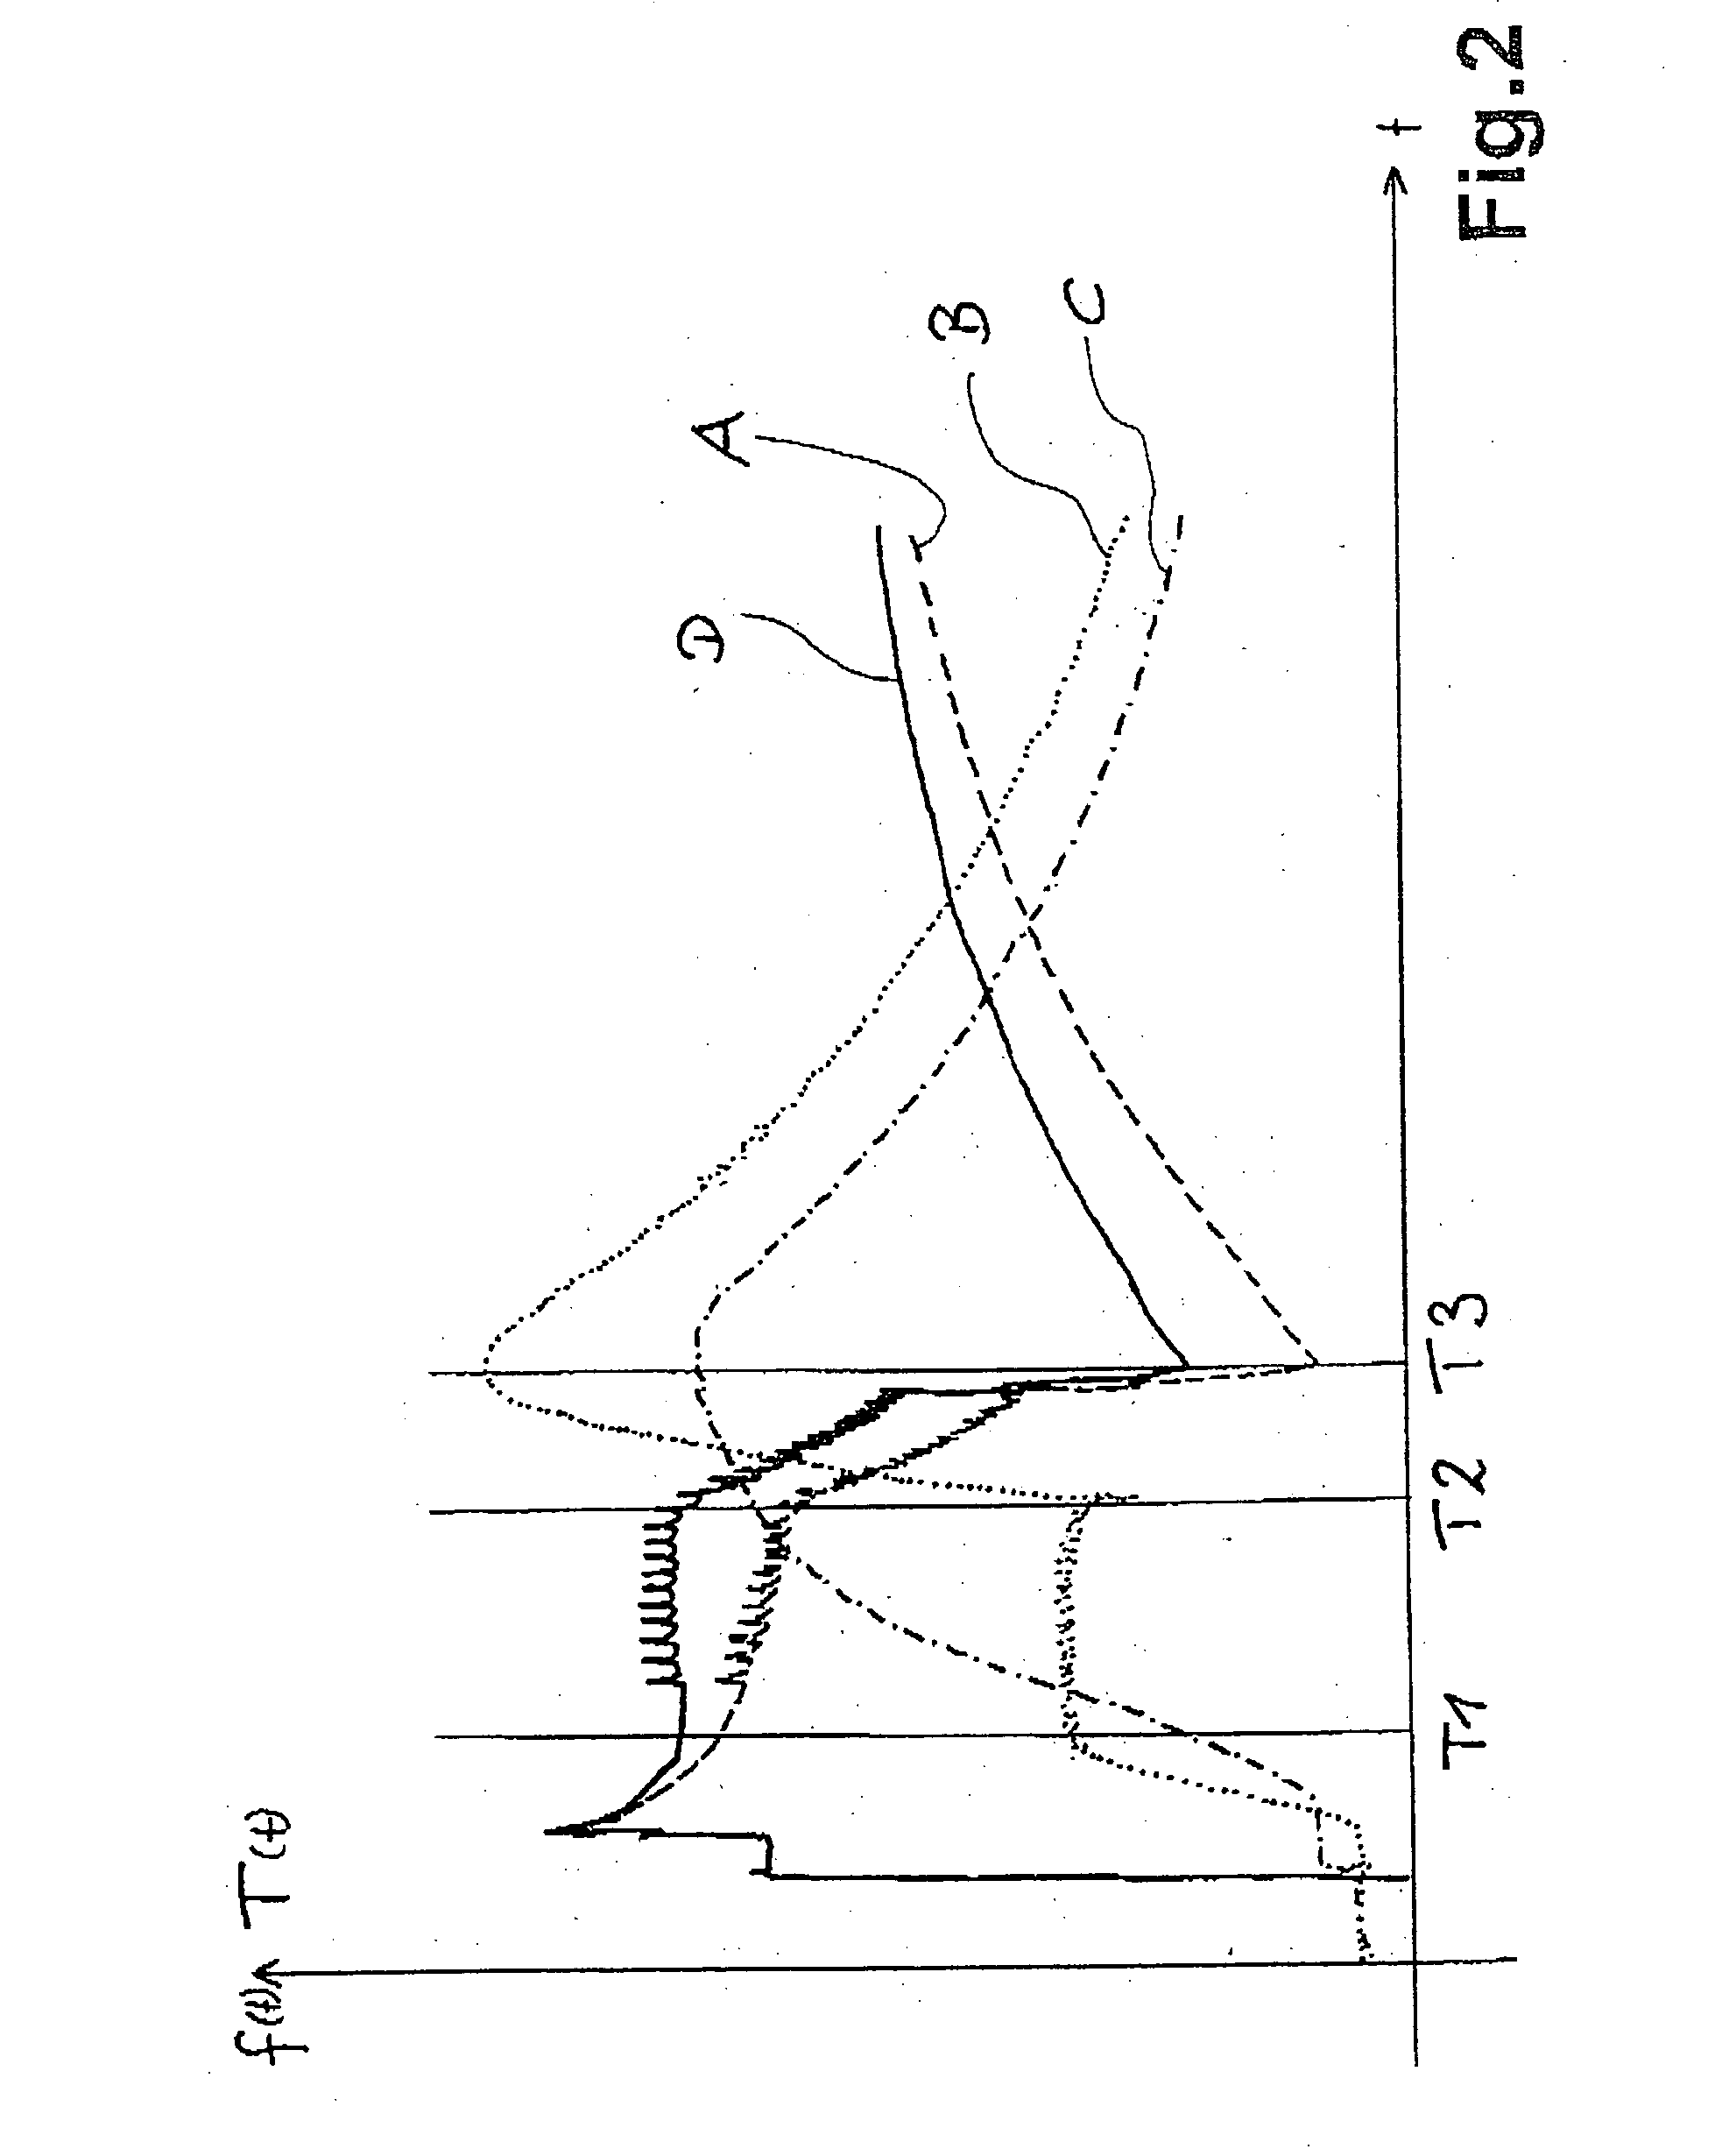 Method for measuring the temperature of a metal saucepan